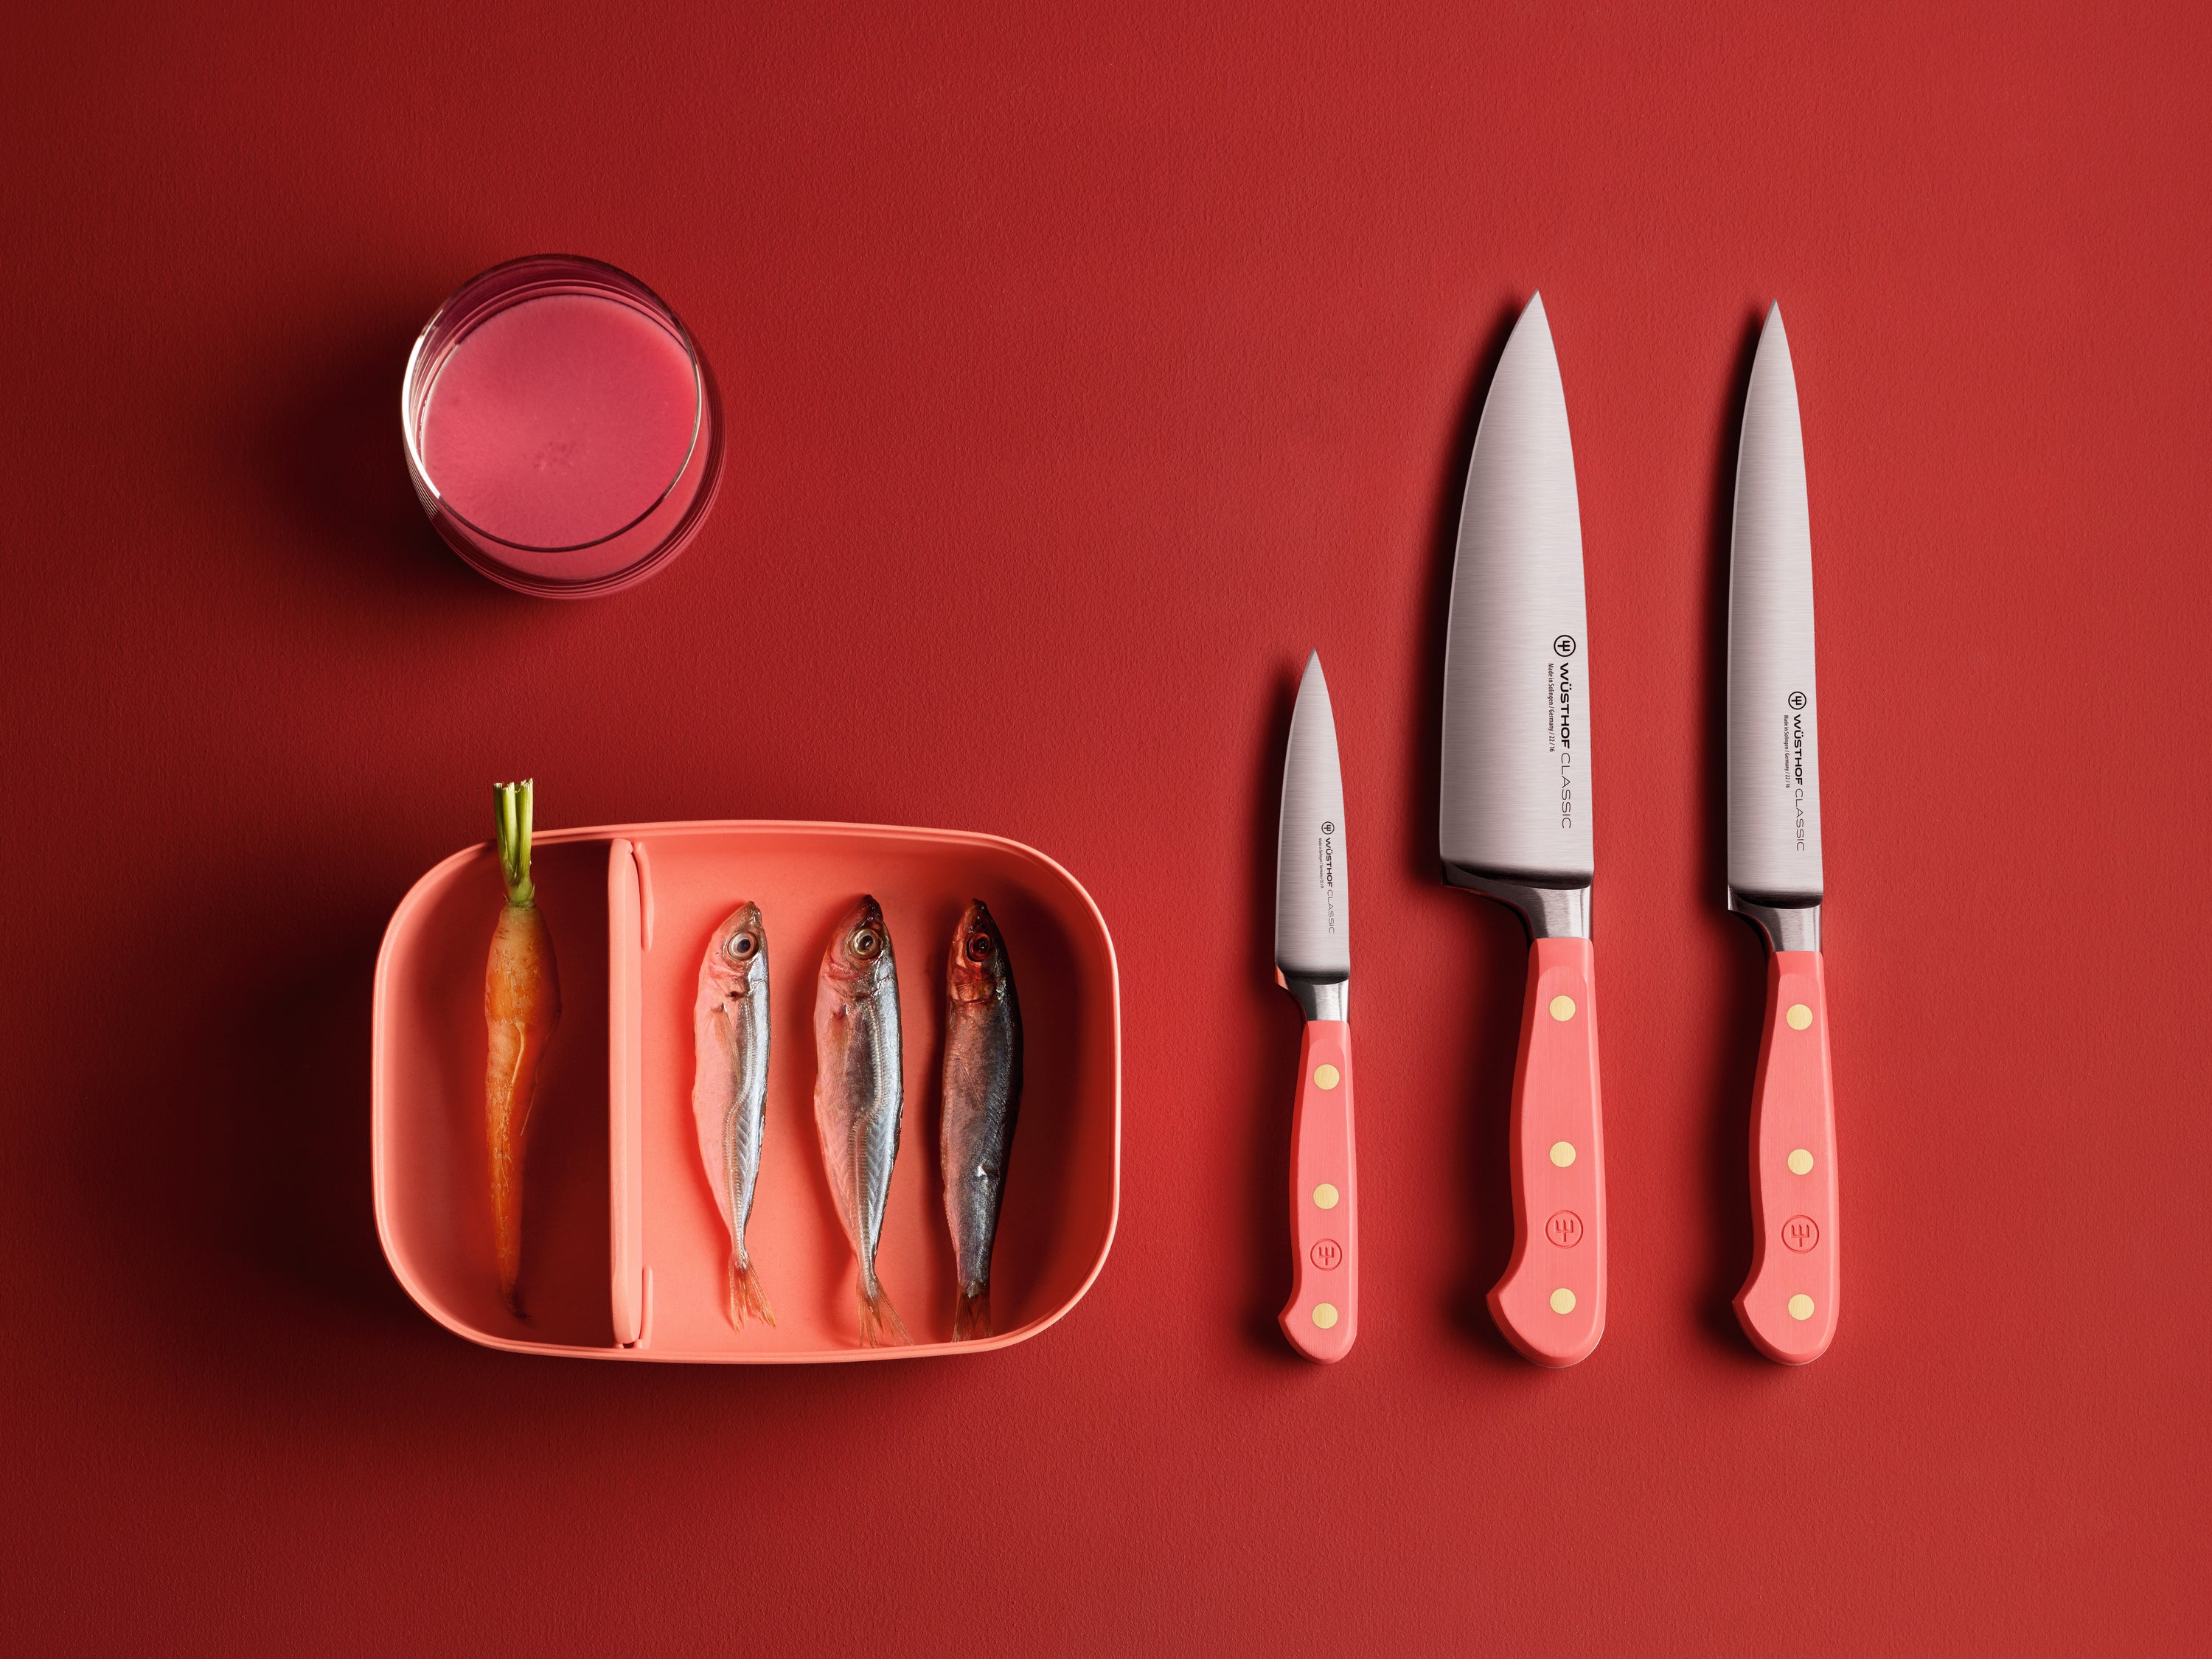 Wusthof Classic Colour Coral Peach Utility Knife 16cm 1061704316W